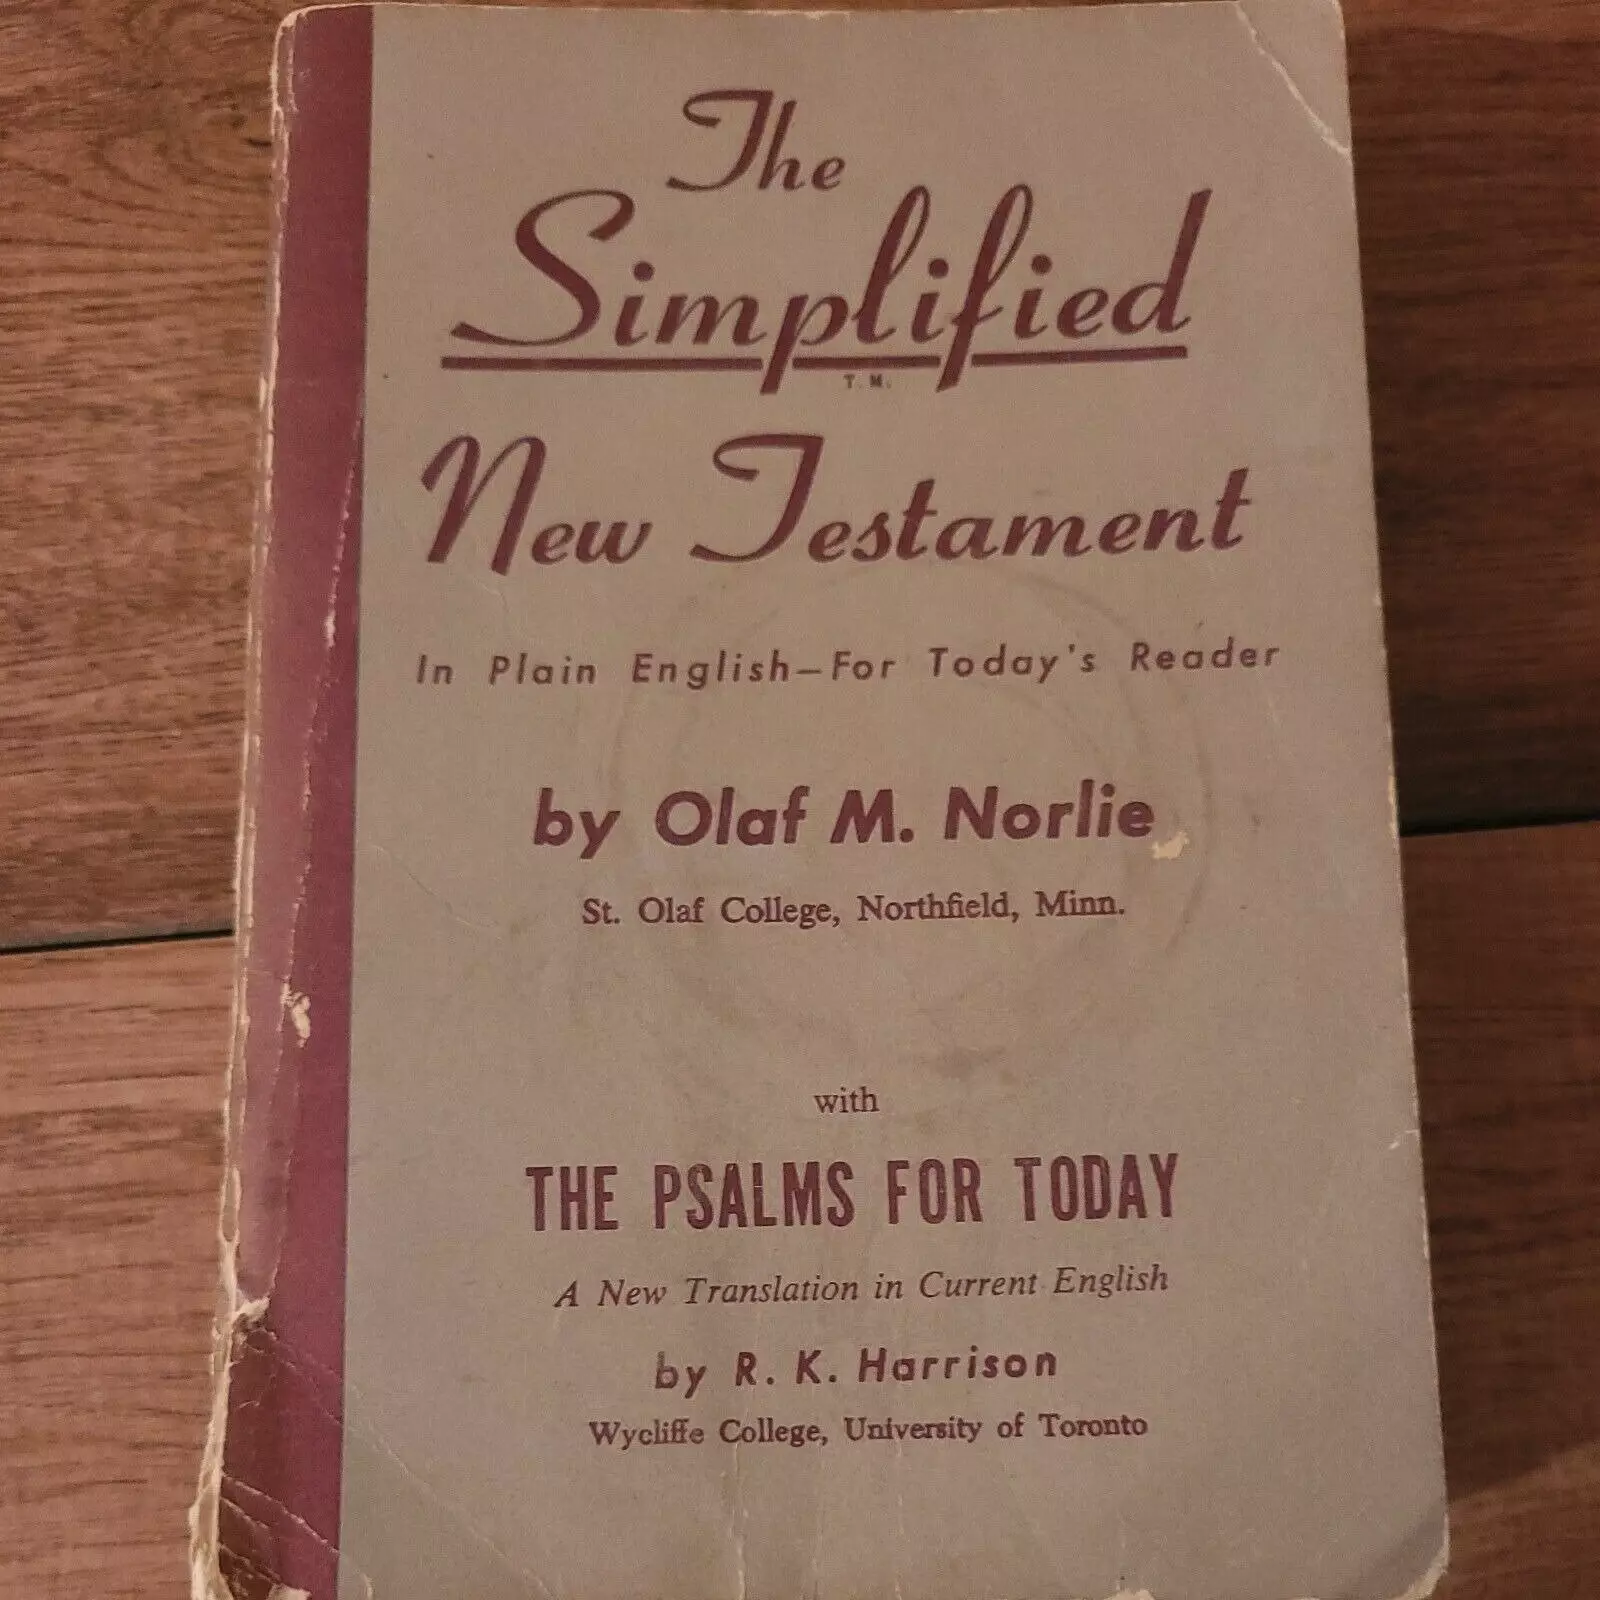 Norlie's Simplified New Testament hero image